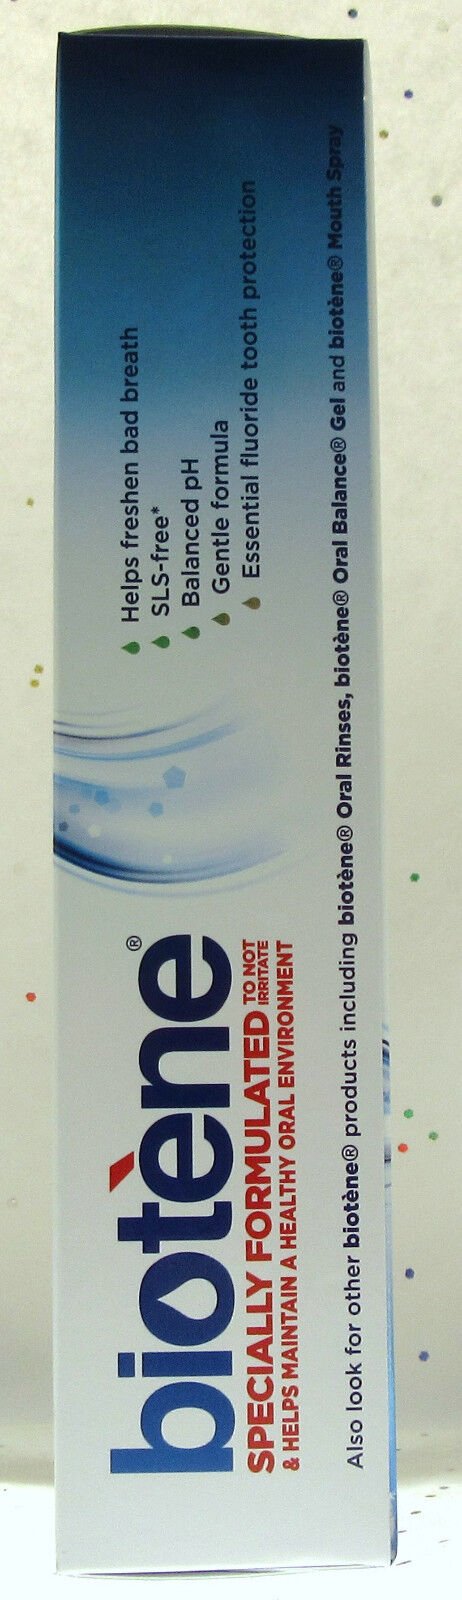 Biotene Fresh Mint Original Dry Mouth Fluoride Toothpaste 4.3oz soothe oral